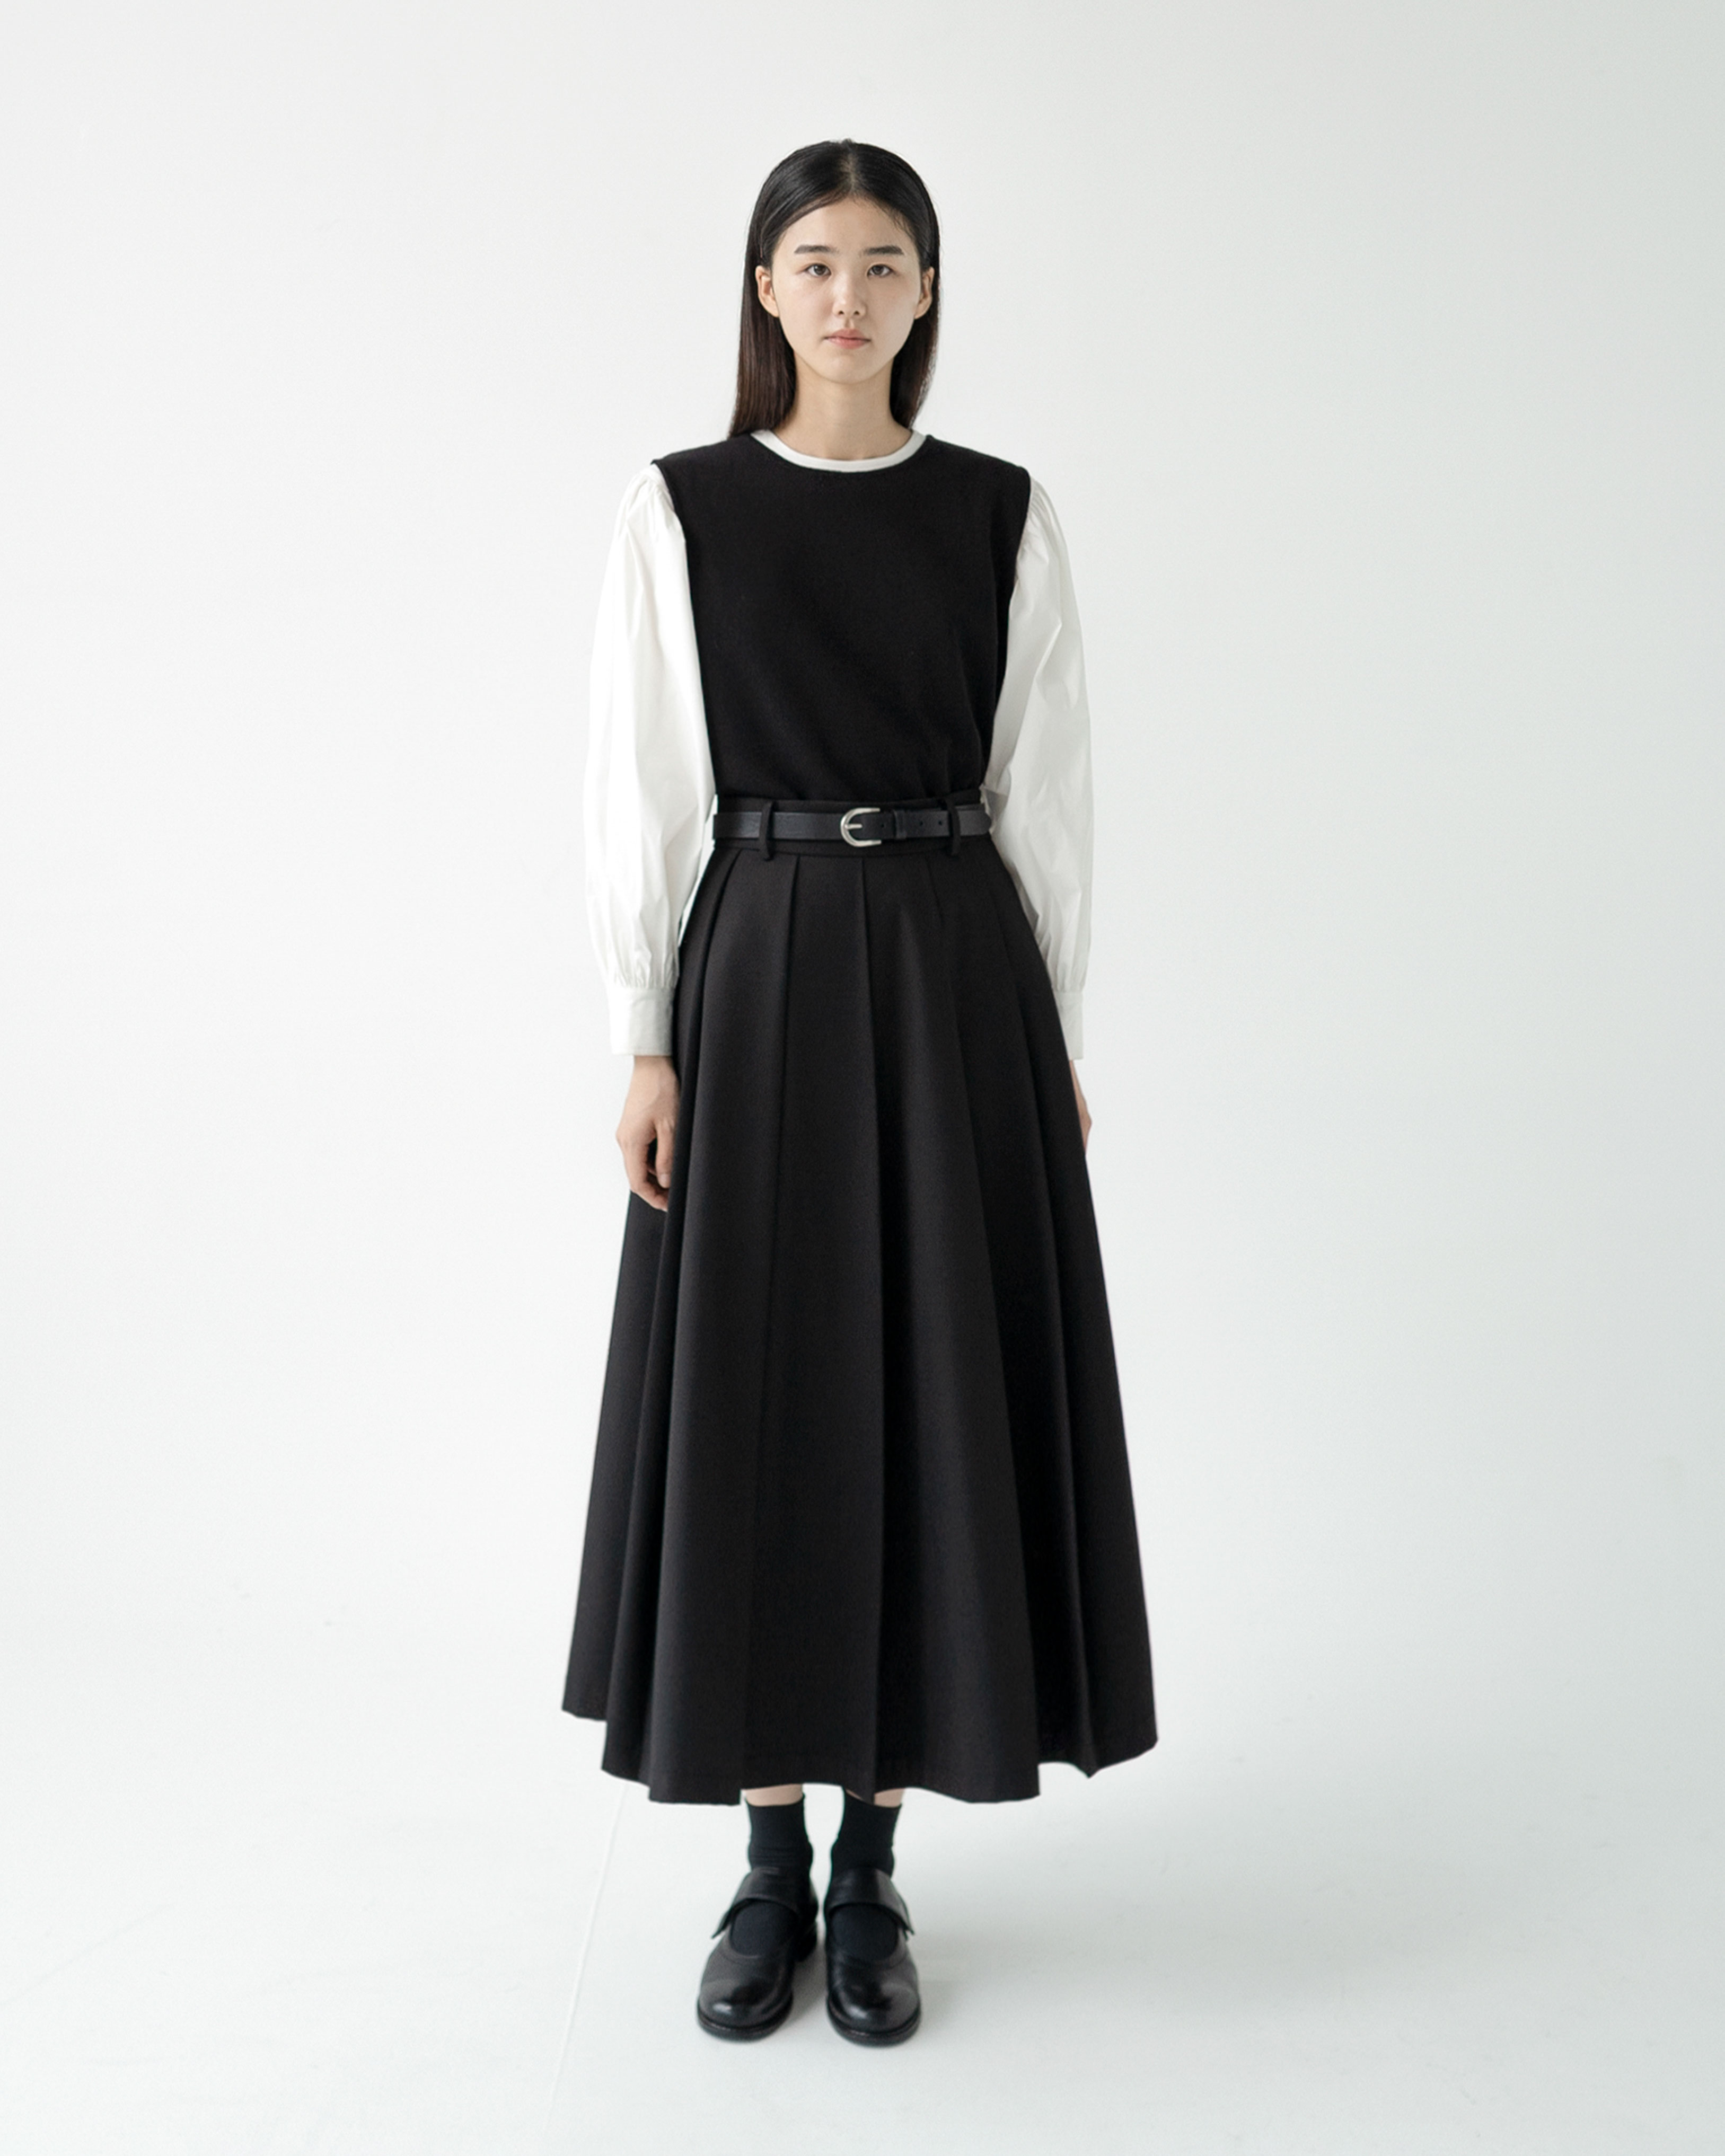 classic pleats skirt (12/2 pm12:00 미입금 취소분 오픈, 12/15 순차 출고 예정)